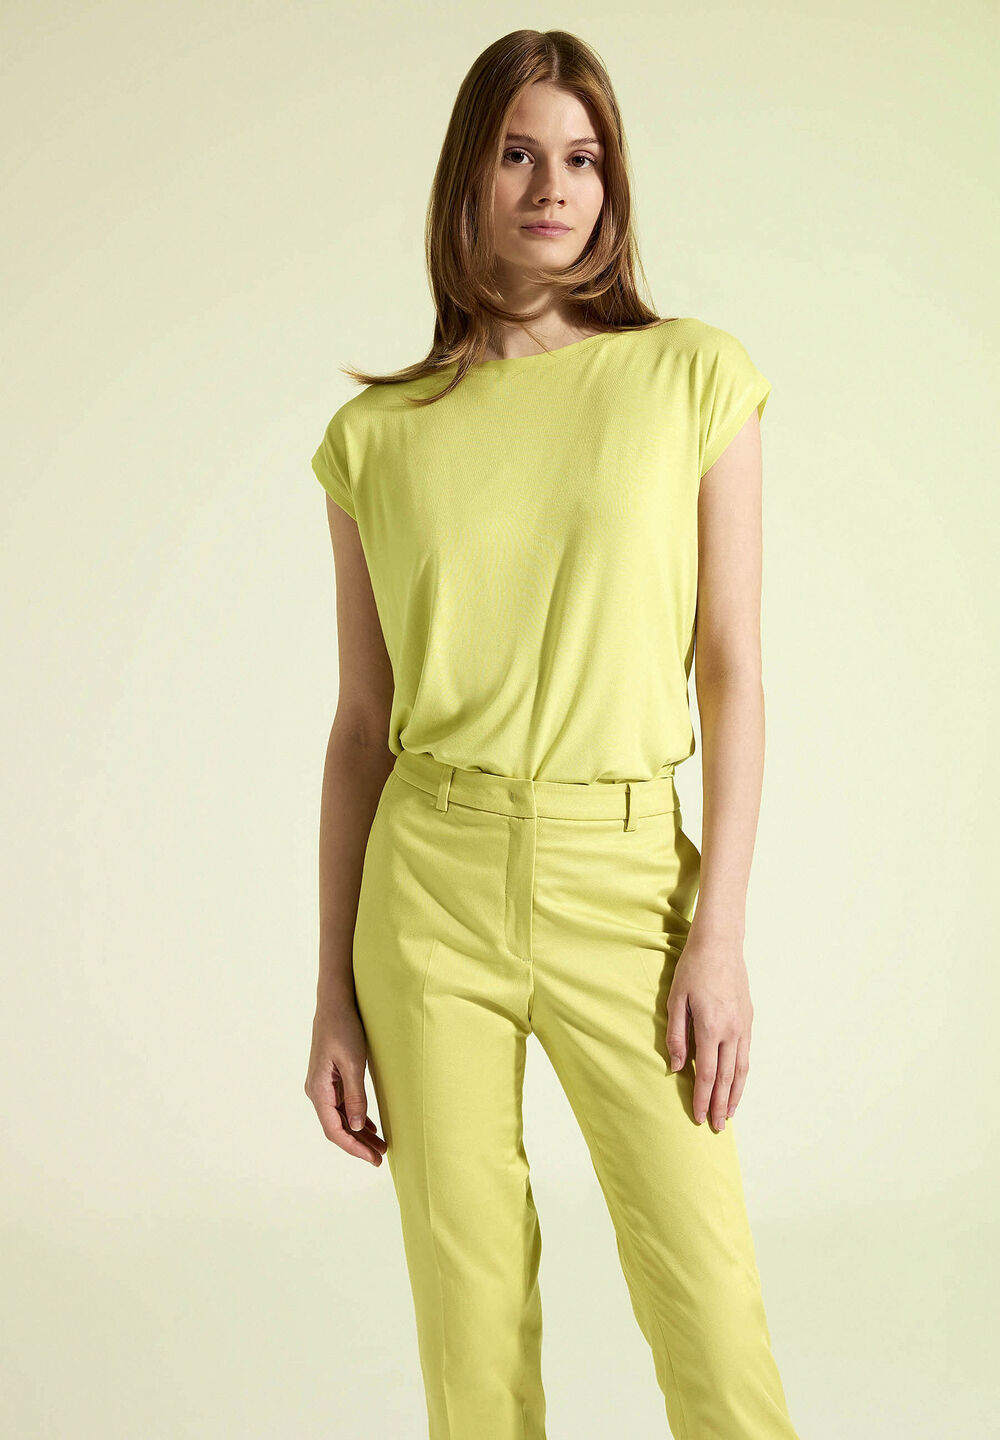 T-Shirt mit Chiffonkante, lime green, Sommer-Kollektion, gelbFrontansicht